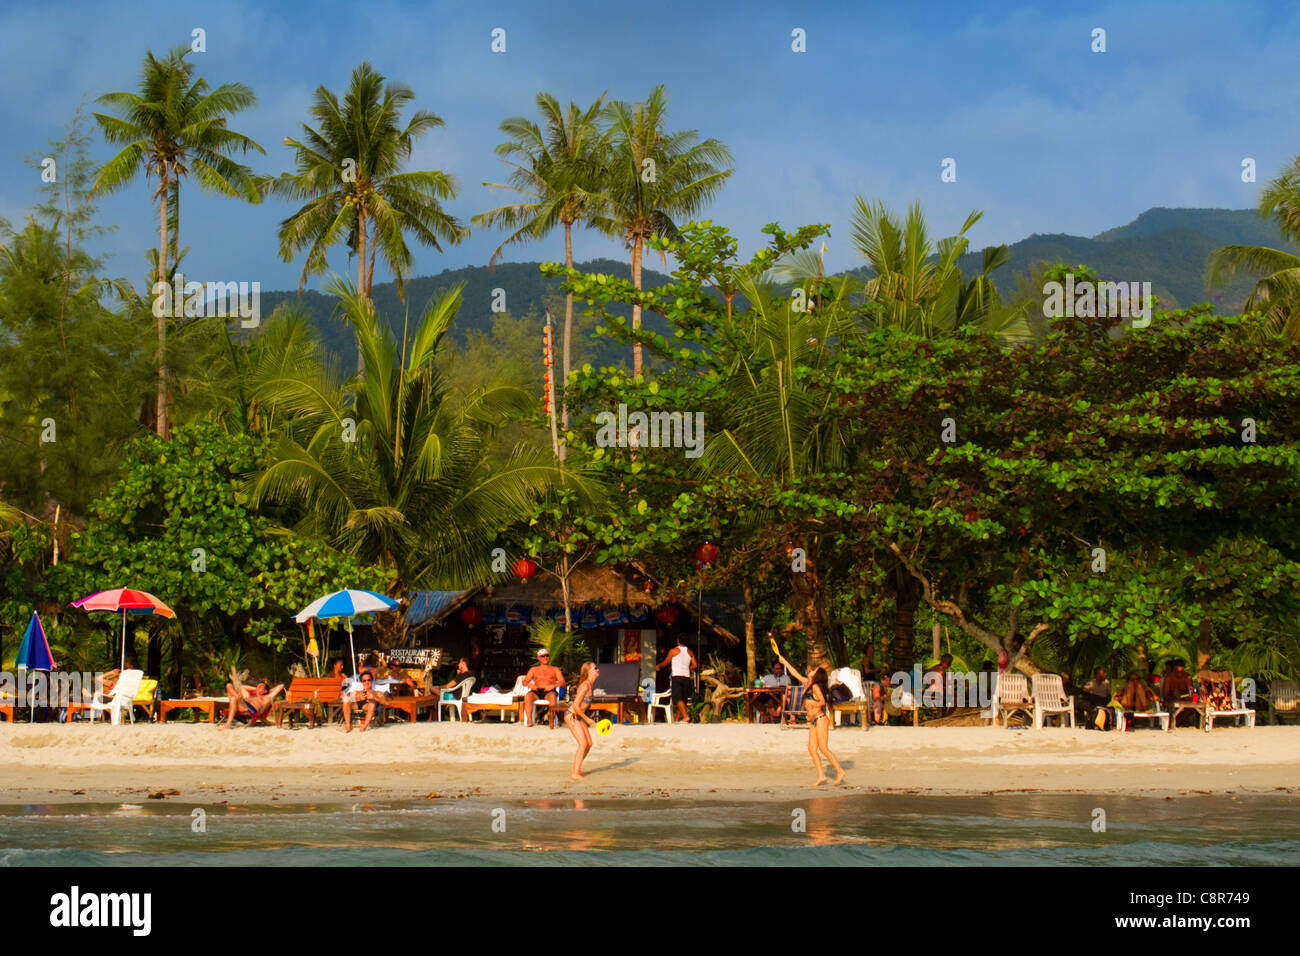 La playa de Klong Prao, Koh Chang, Tailandia Foto de stock